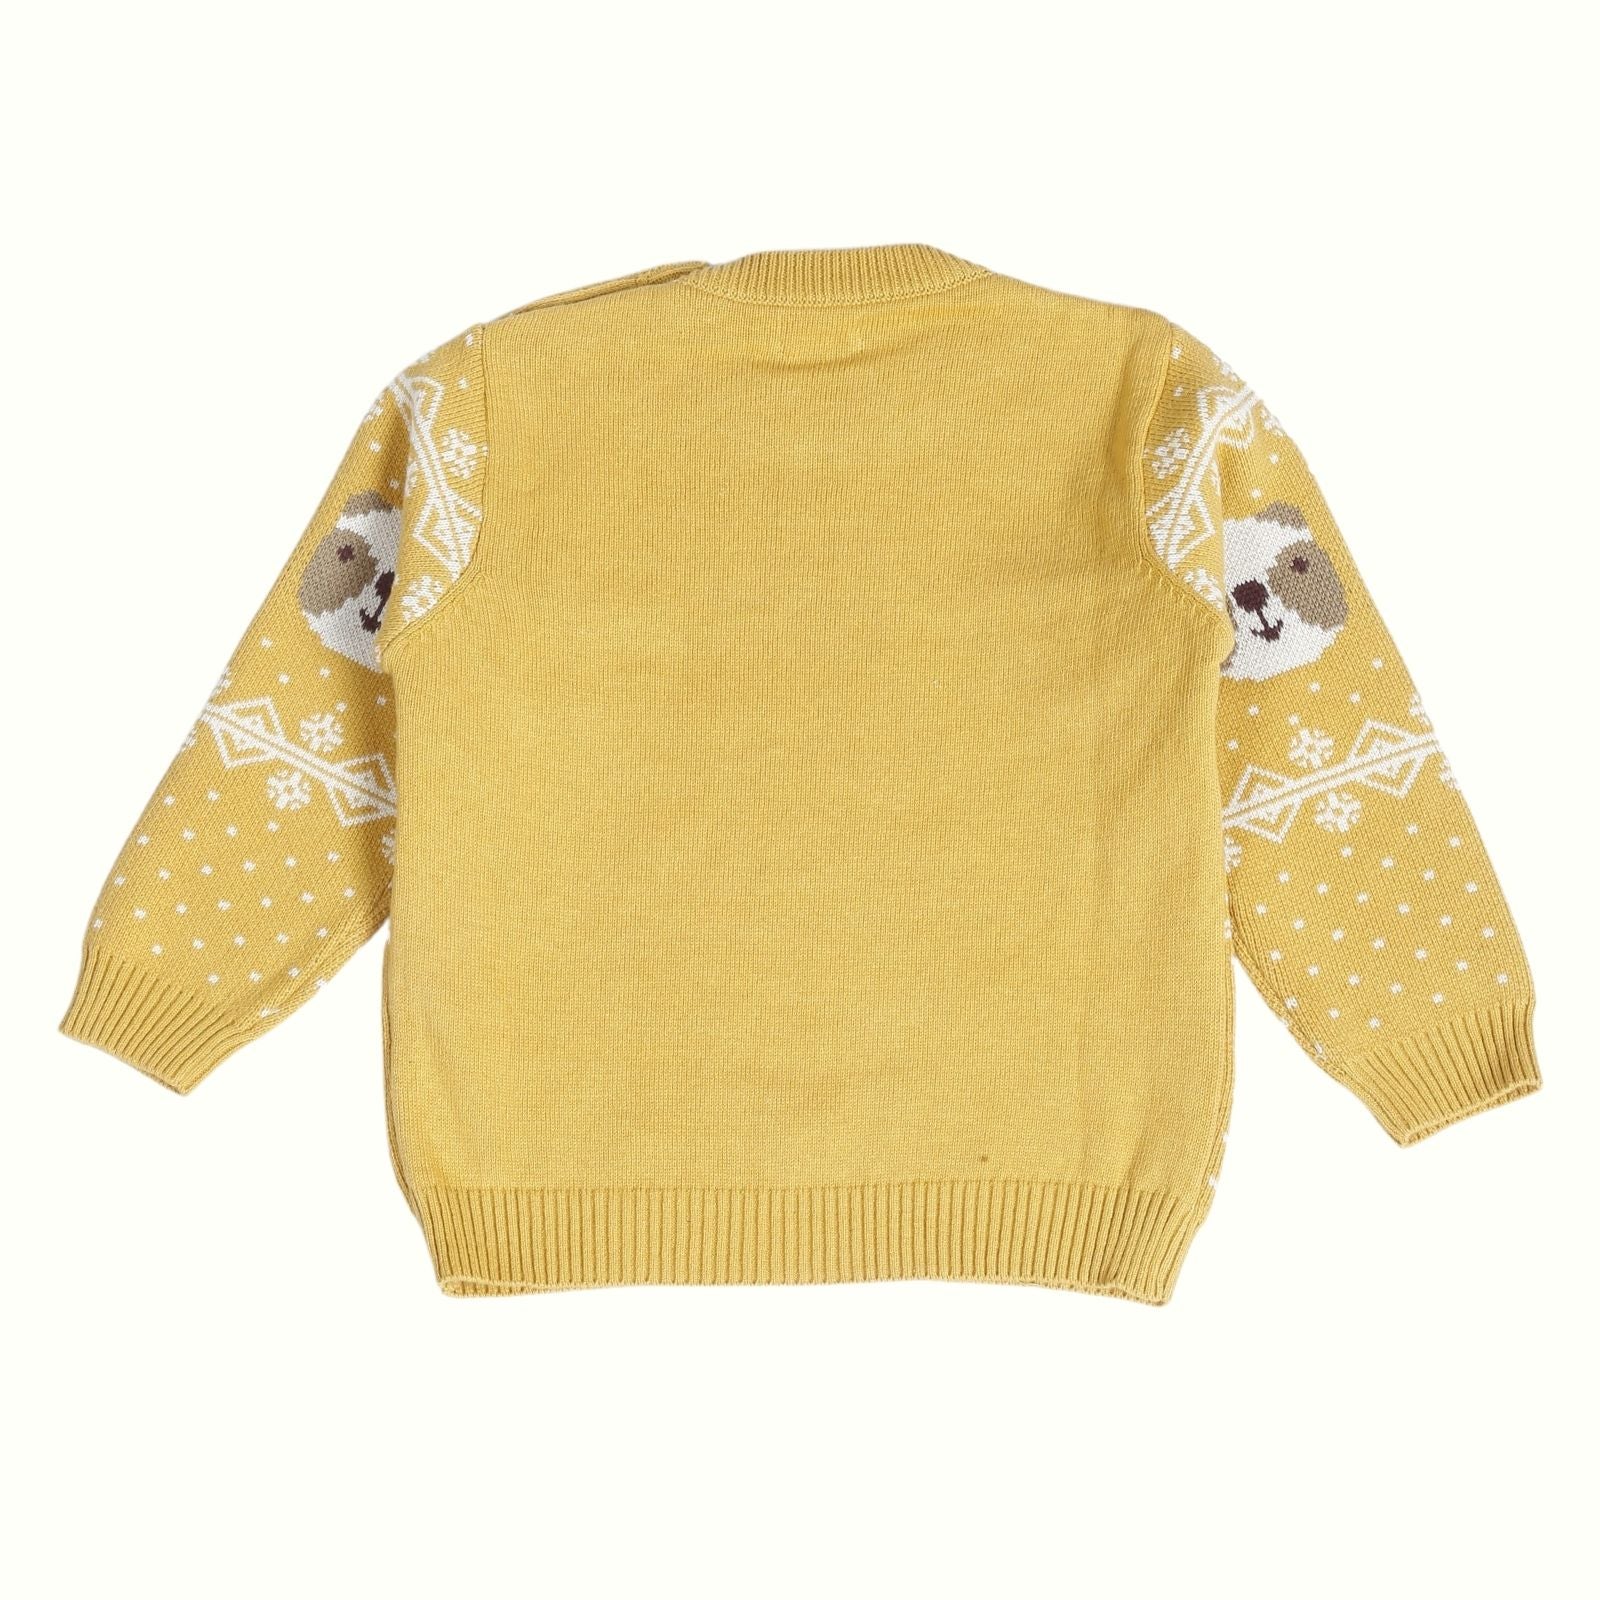 Greendeer Enchanting Bear Jacquard 100% Cotton Sweater Set of 2